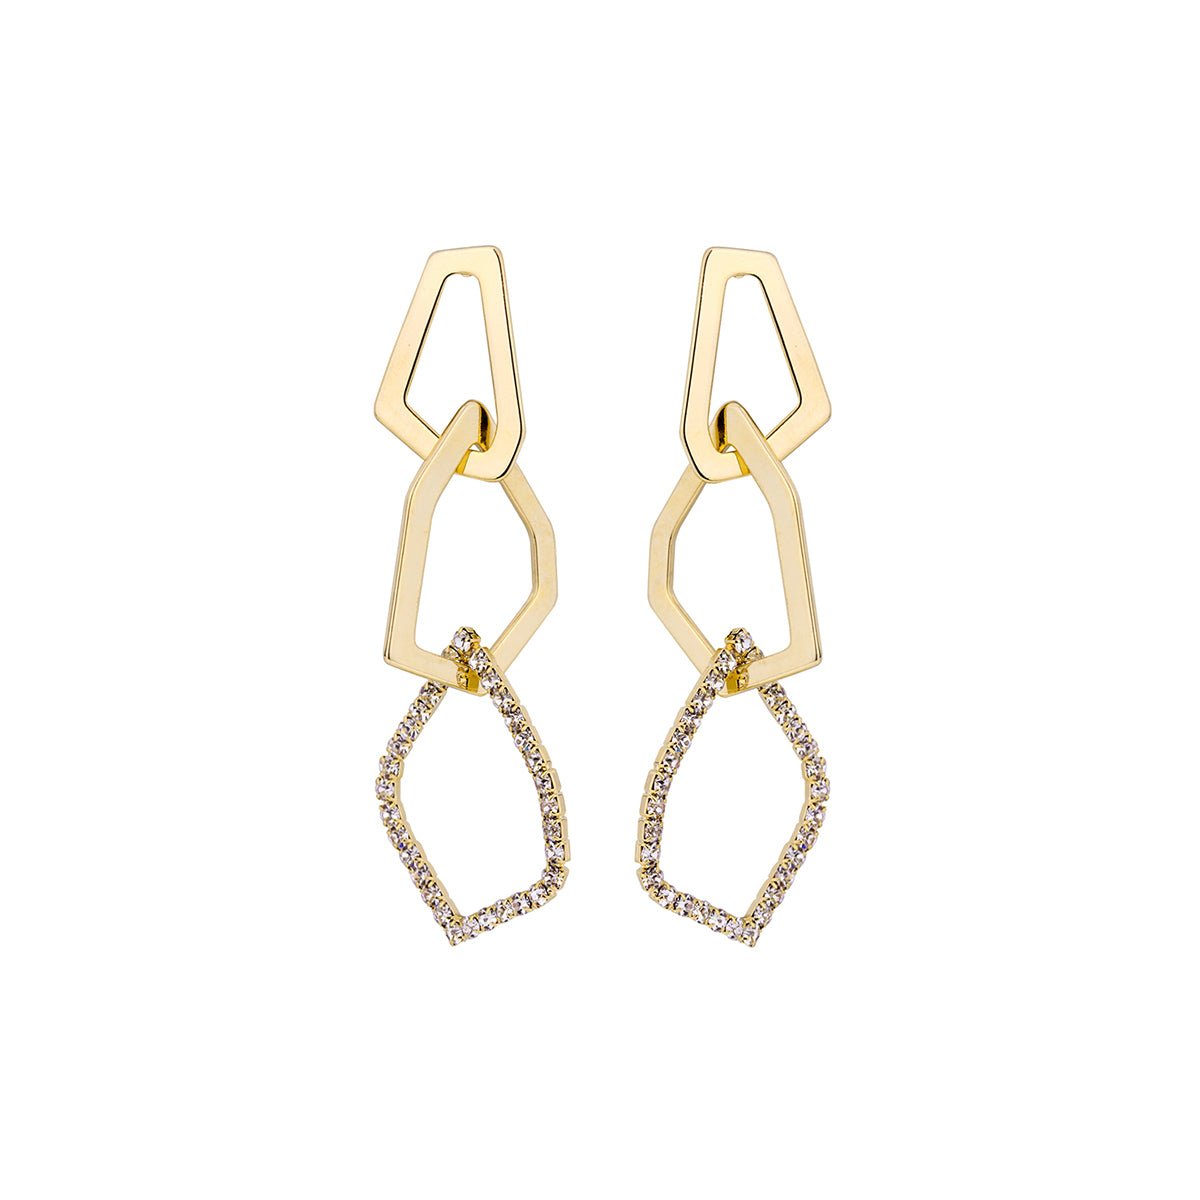 Space Links Gold Earrings - 0cm